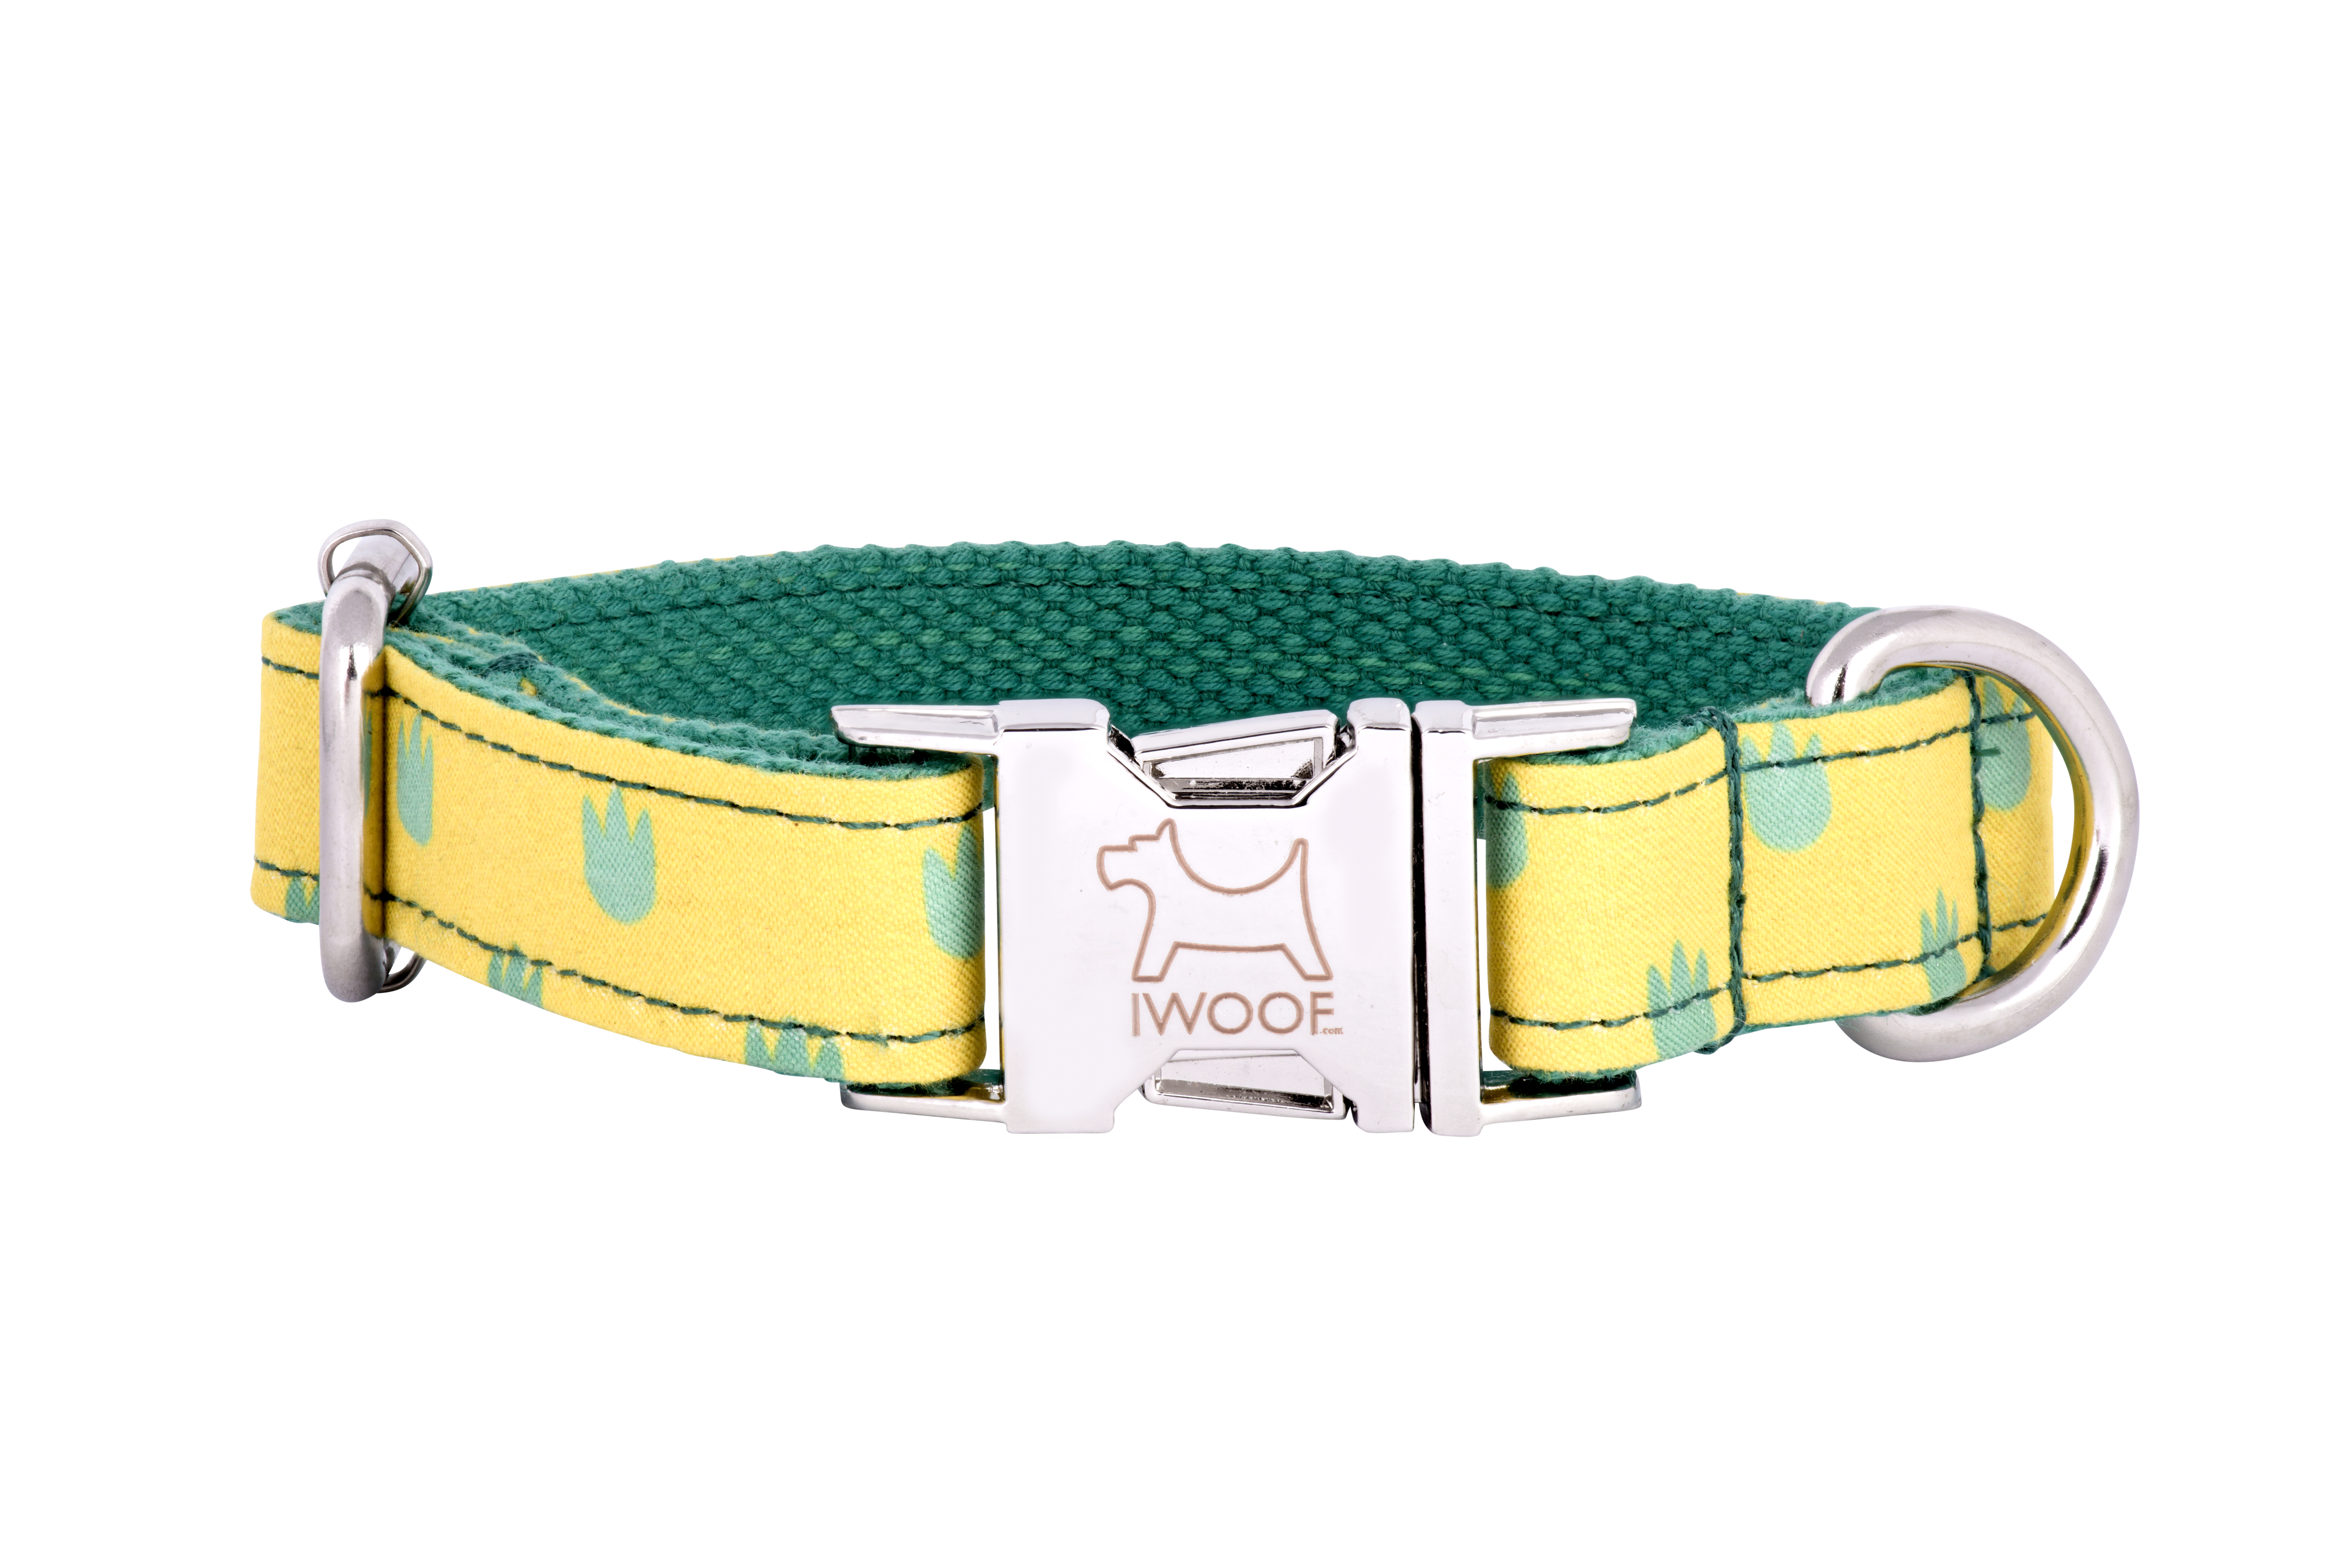 Desert designer dog collar and dog lead by IWOOF